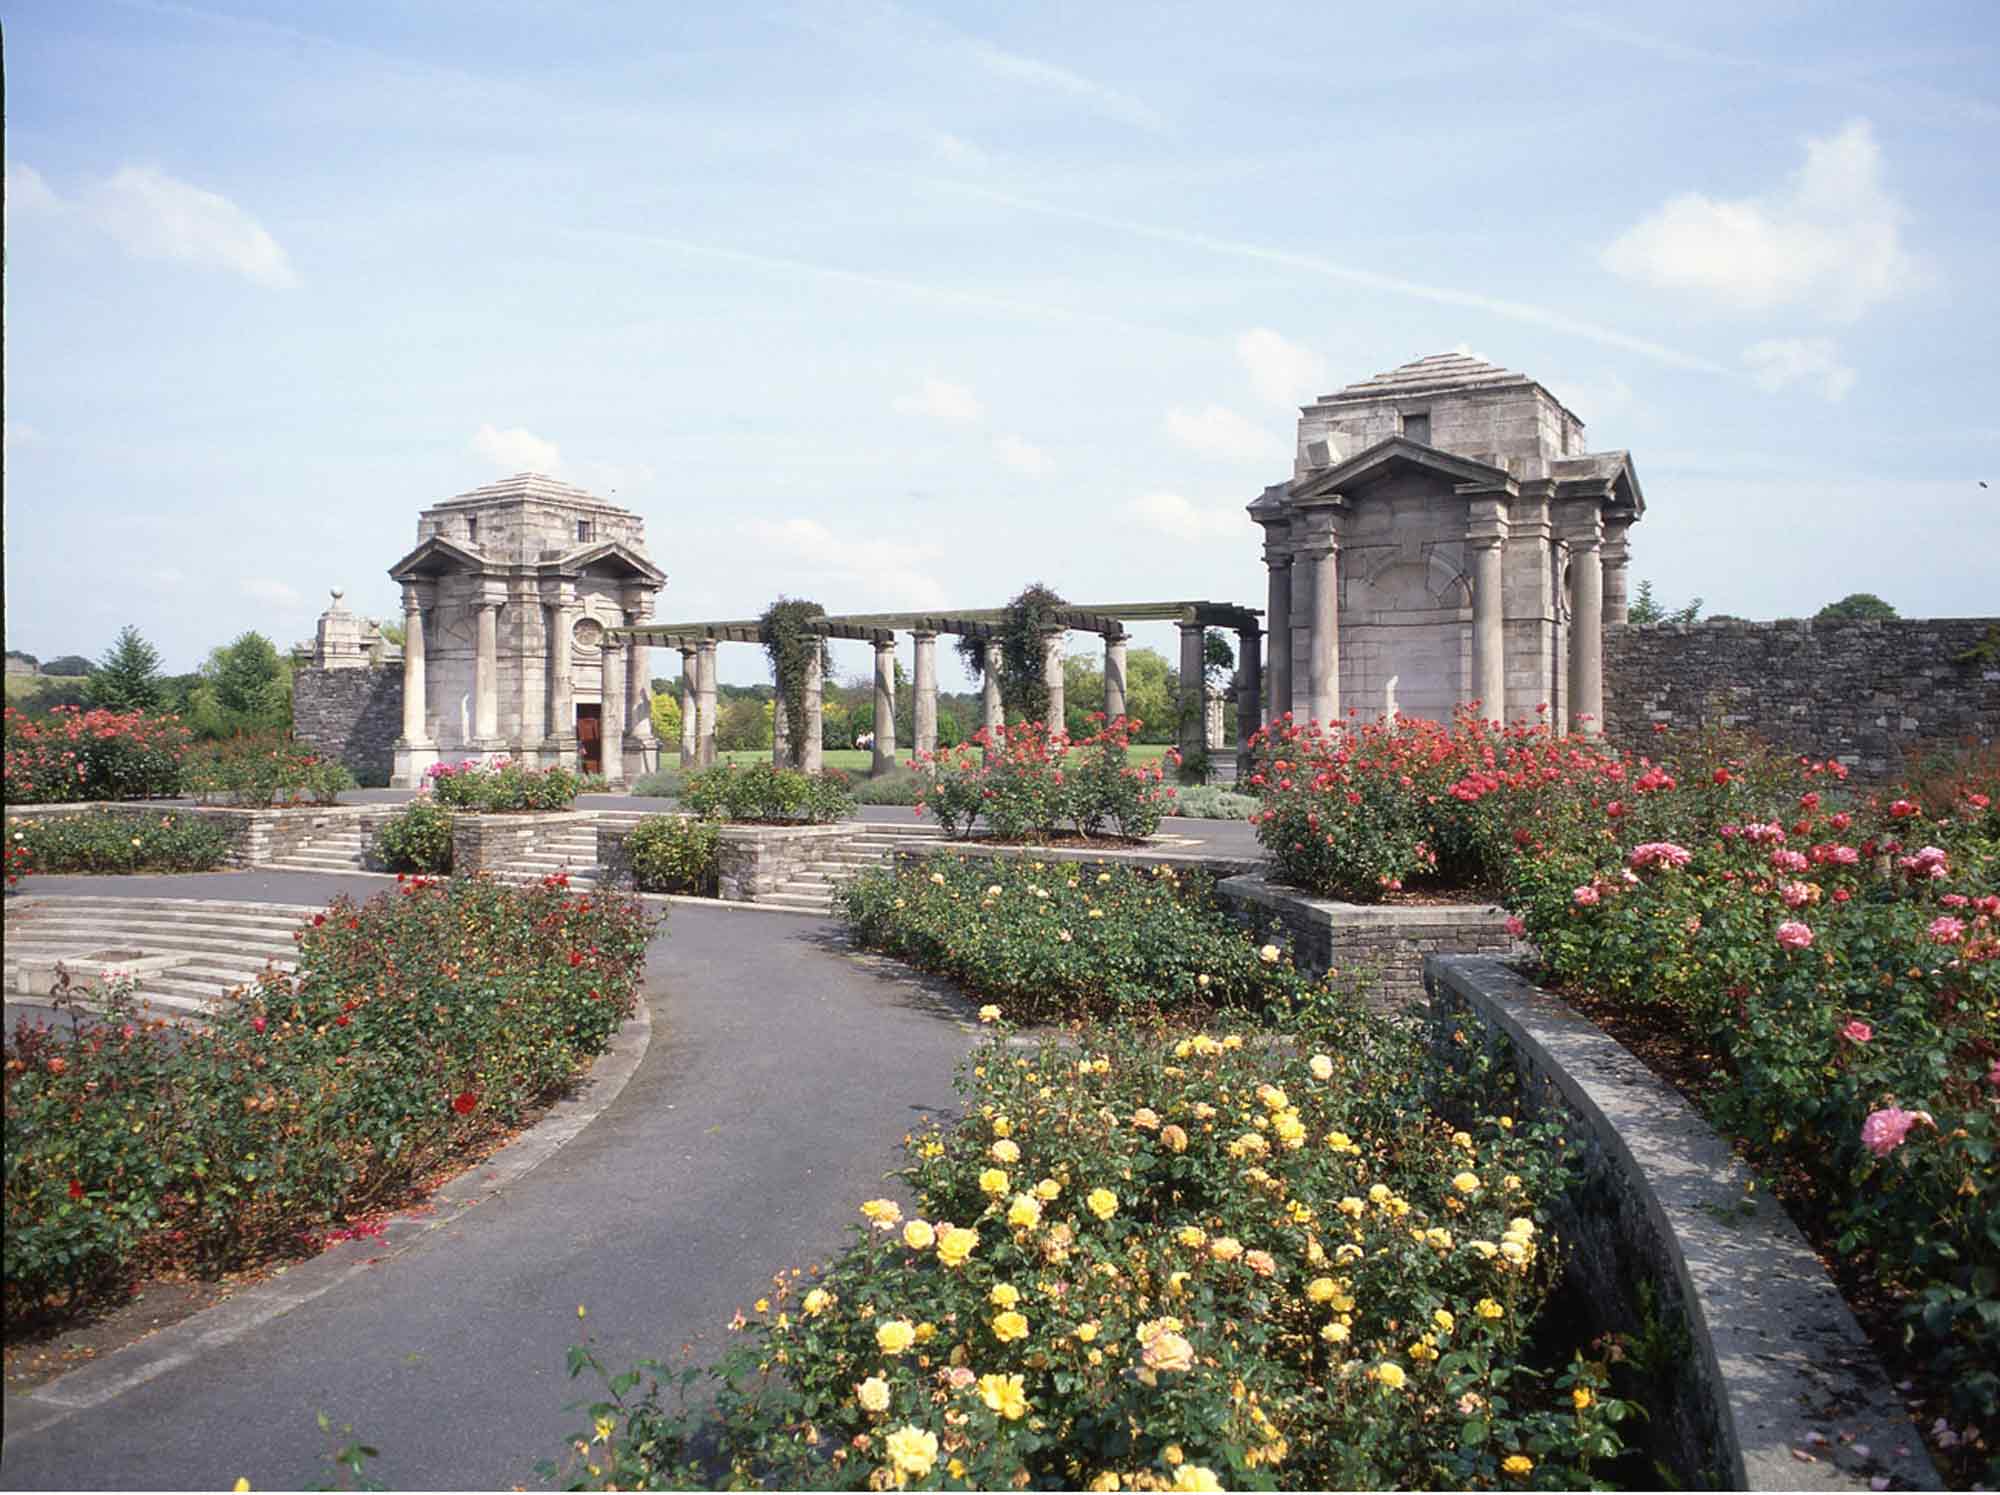 War memorial Gardens pergola flanked by 2 granite pavilions with sunken rose garden in foreground.